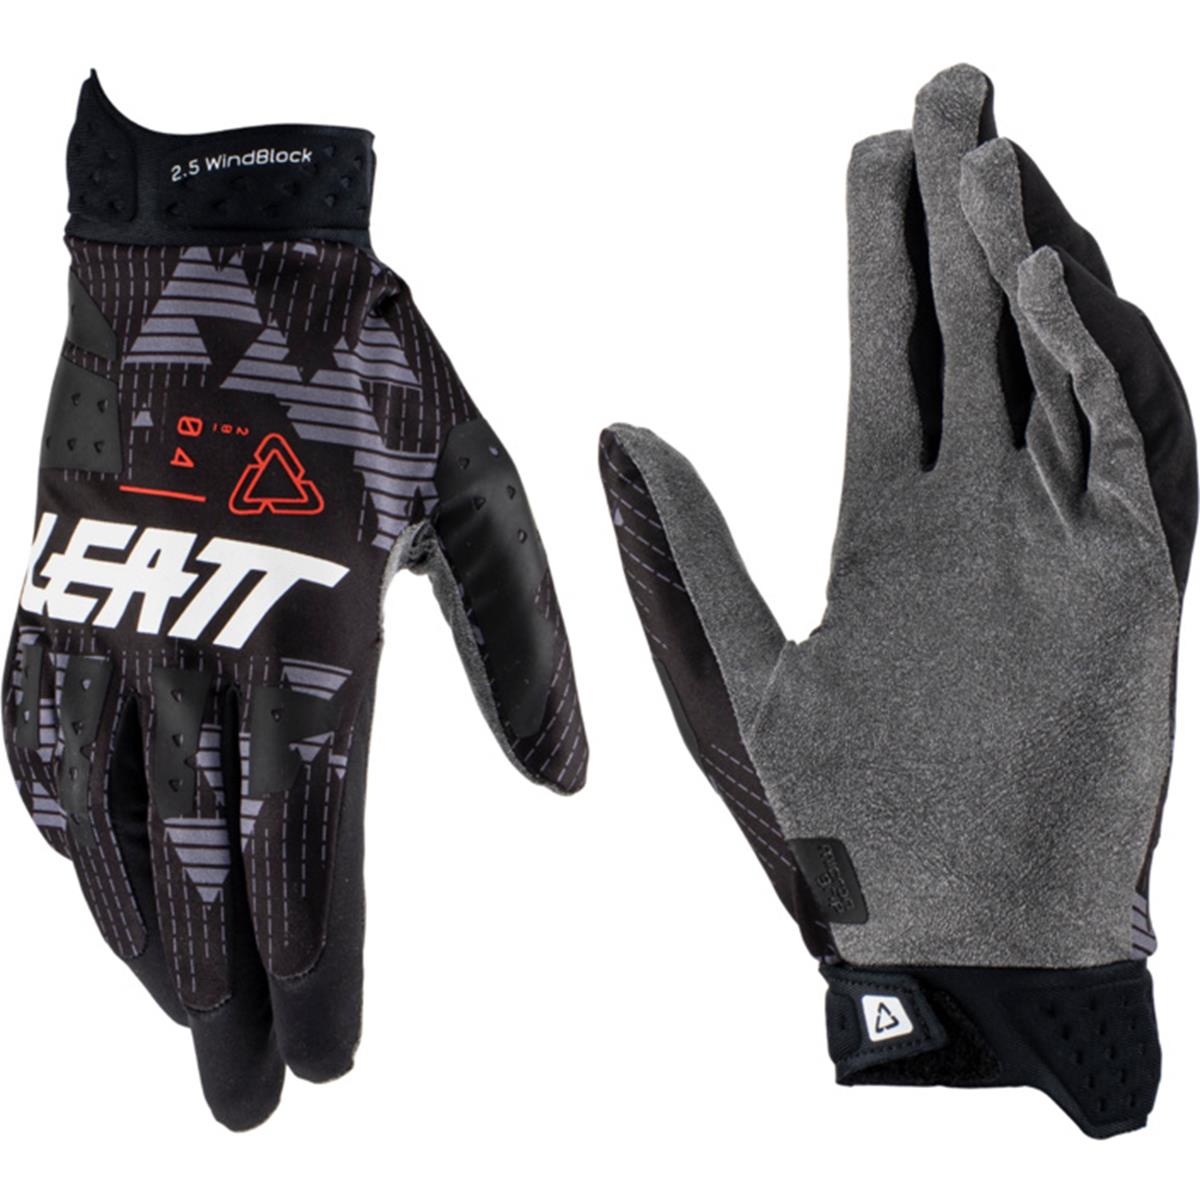 Leatt Gloves Moto 2.5 WindBlock V23 Black